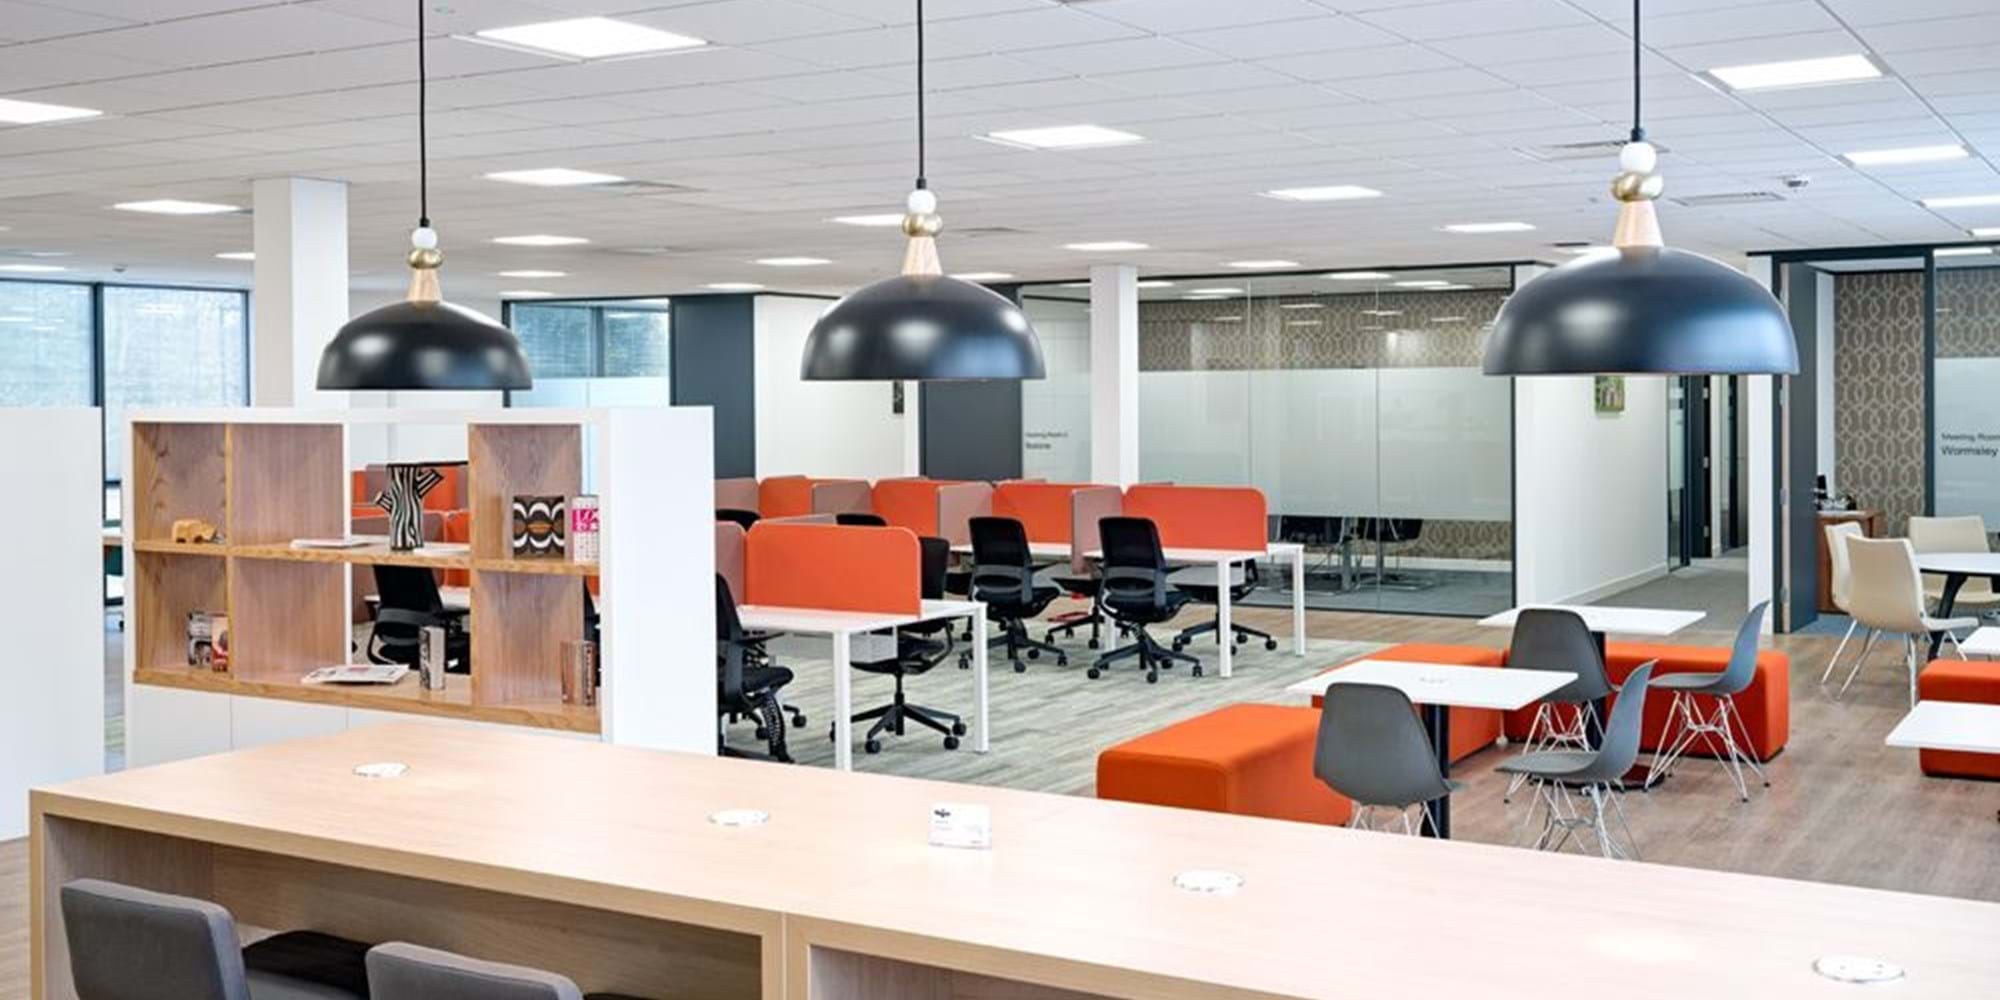 Modus Workspace office design, fit out and refurbishment - Regus Stokenchurch - Regus Gerrads Cross 02 highres sRGB.jpg